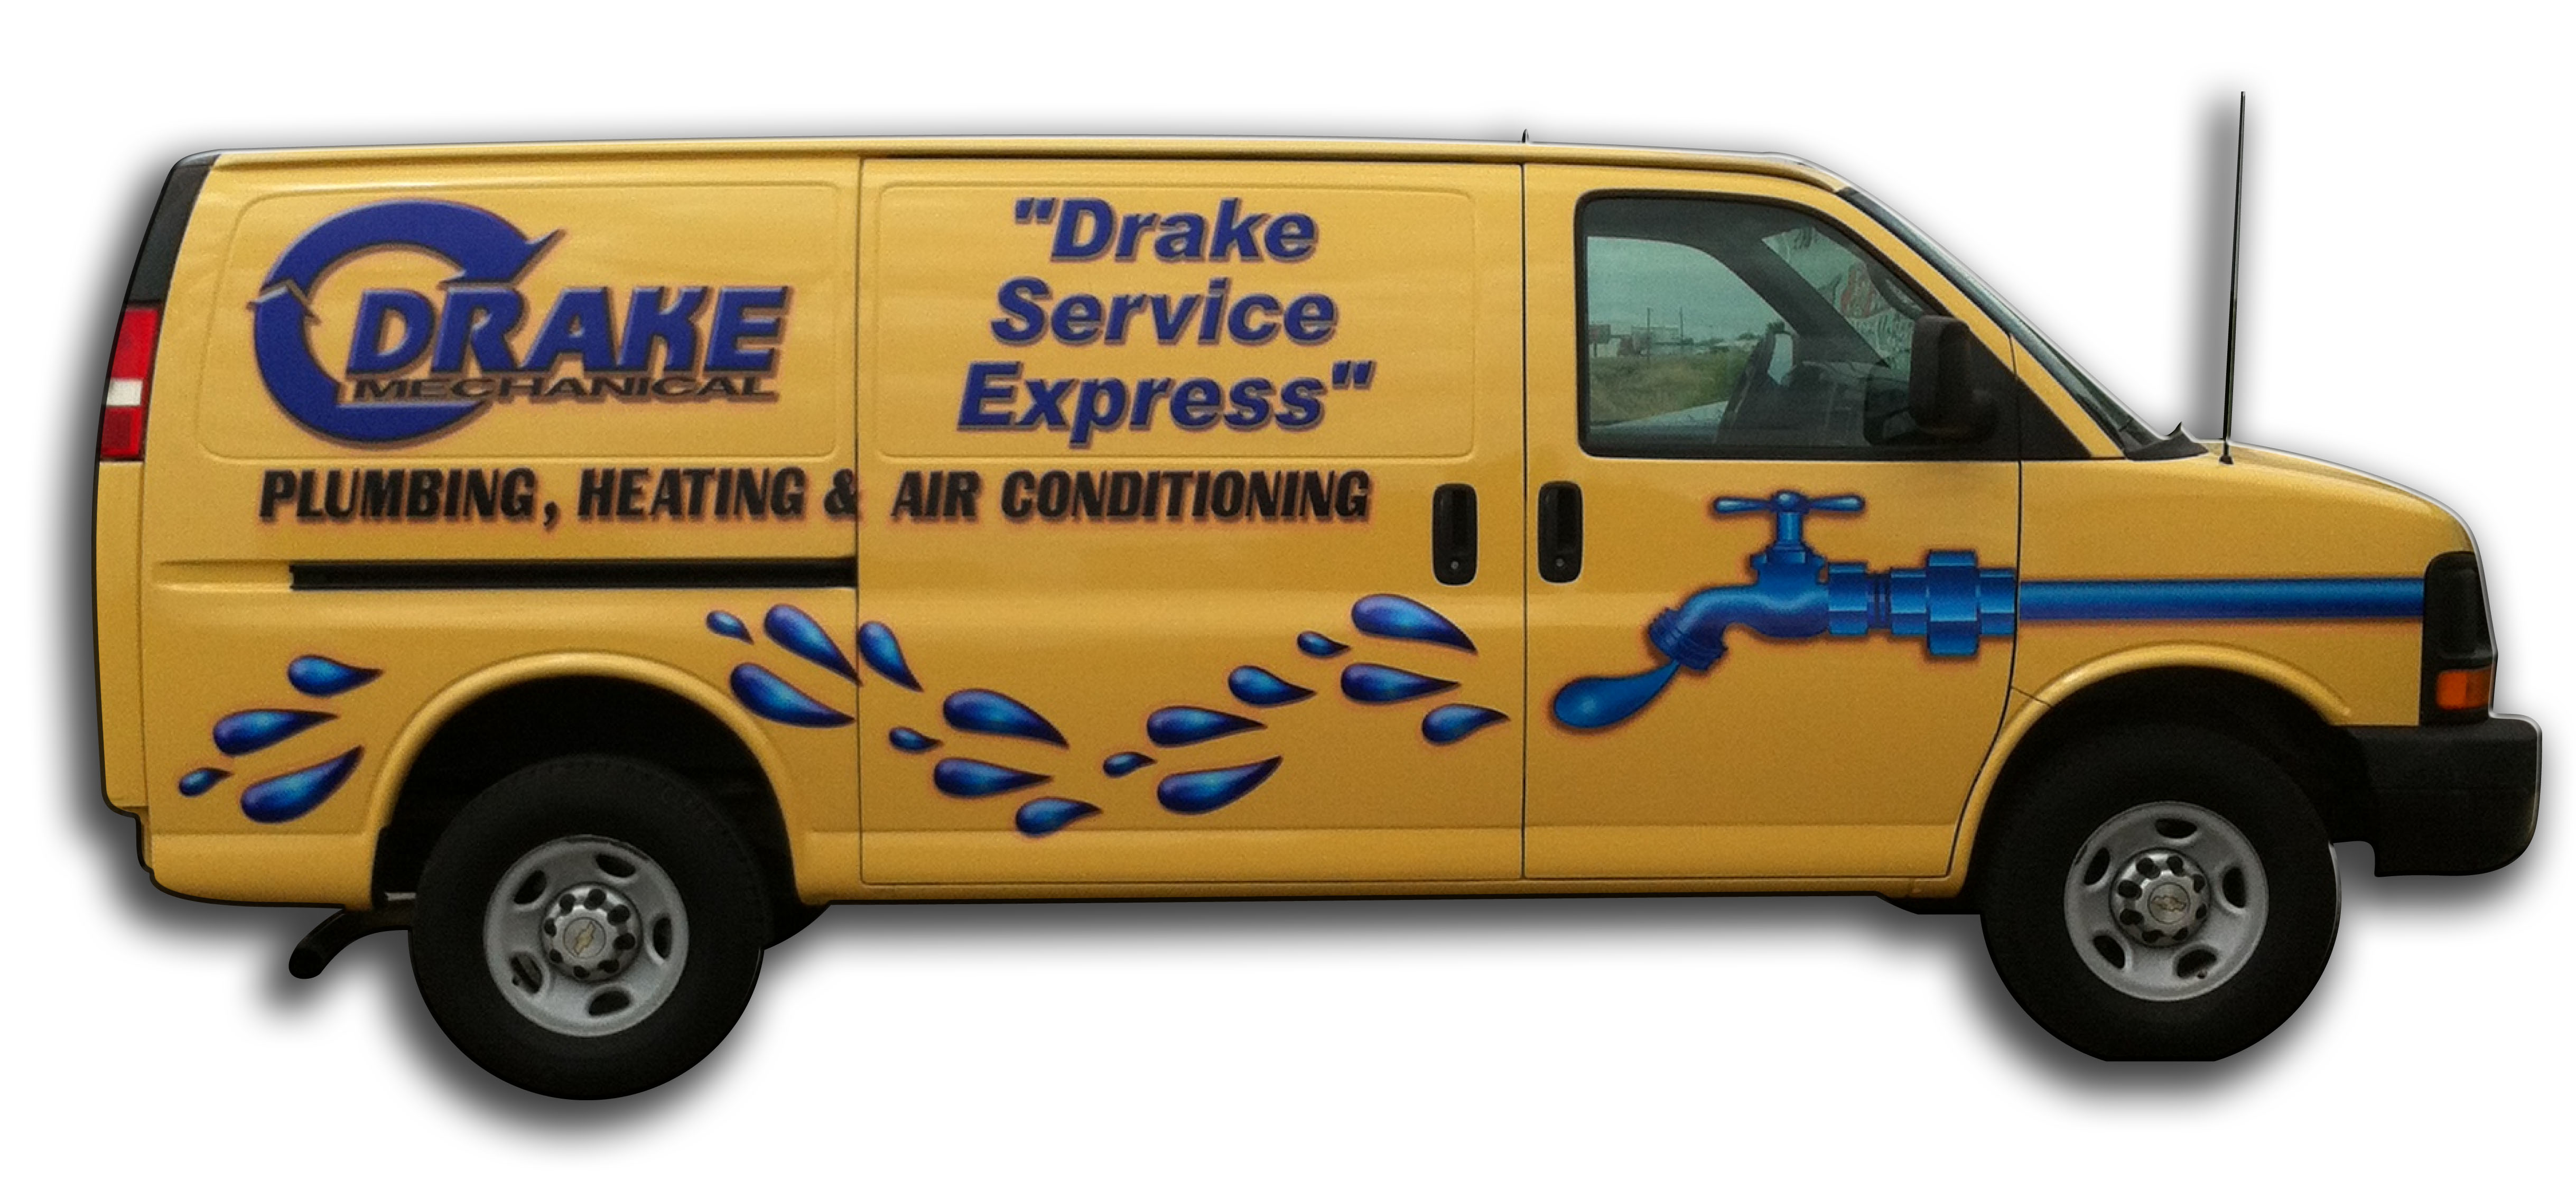 Drake Mechanical, The guys in the big yellow trucks